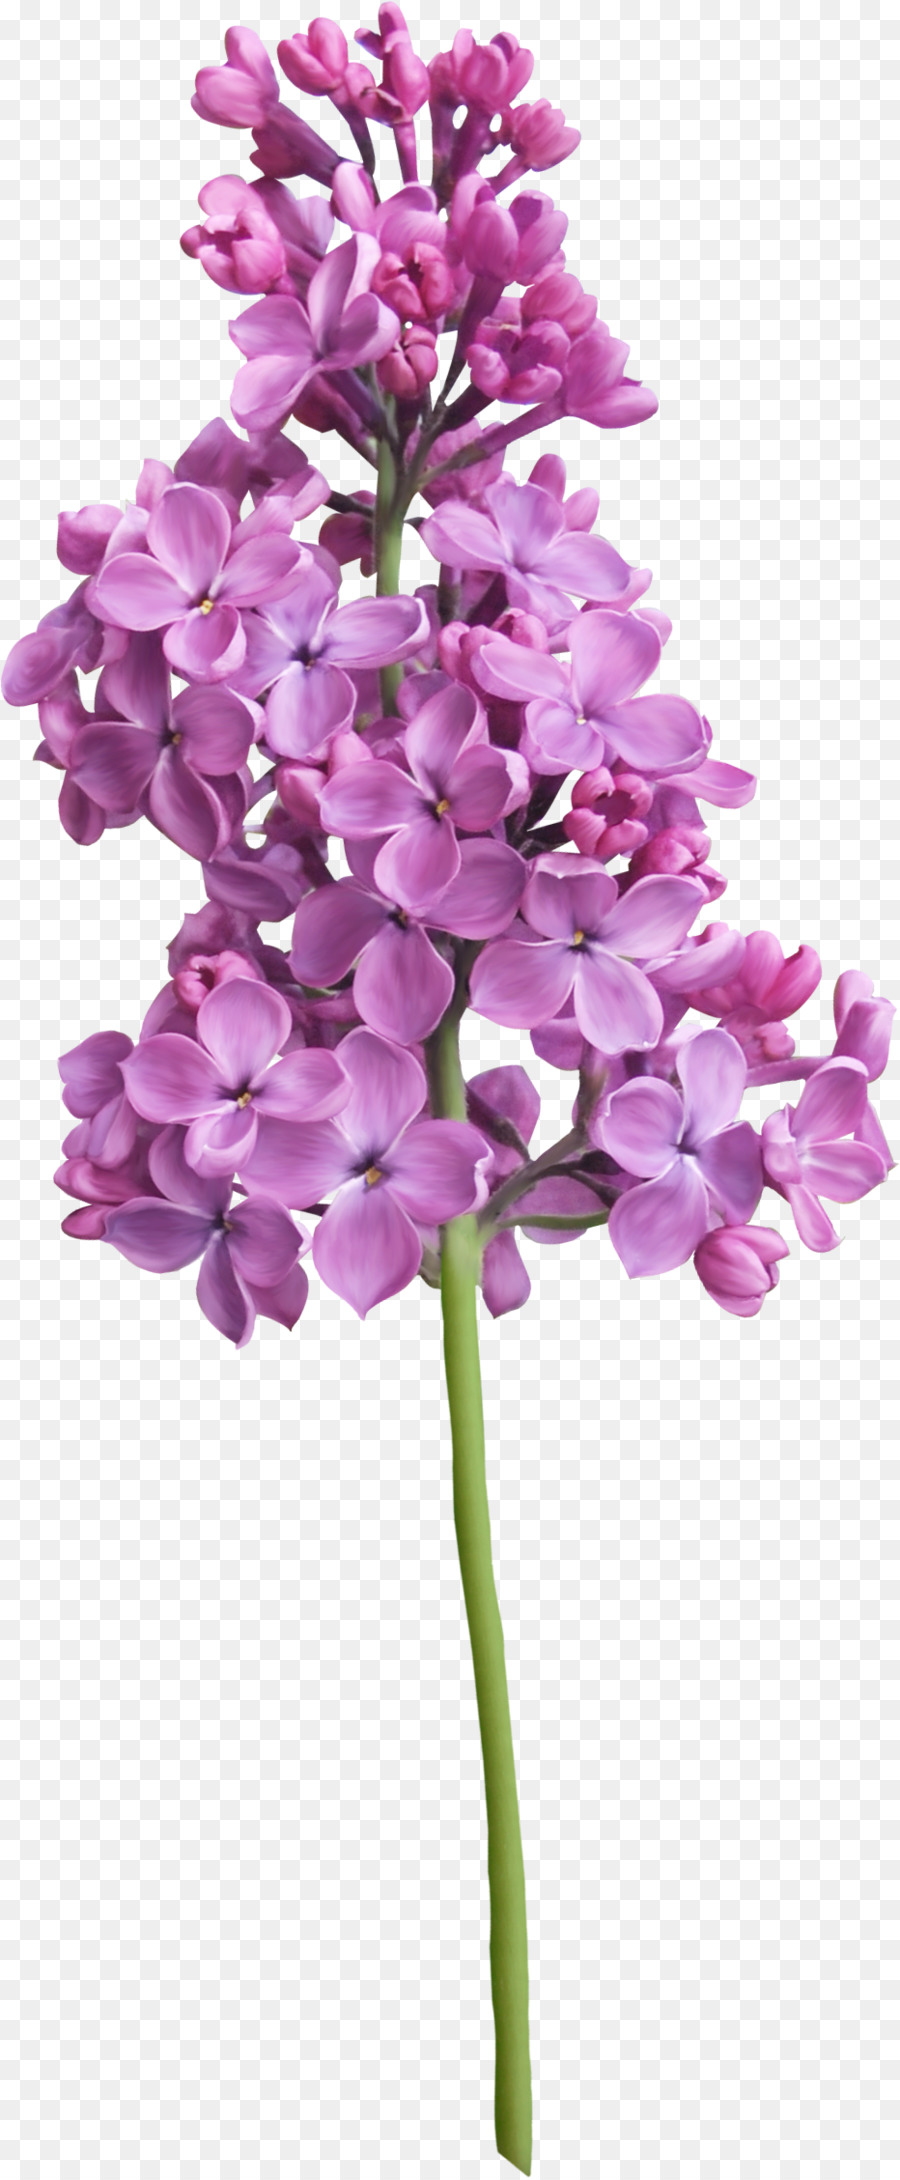 Purple Lilac Flower - lilac png download - 932*2255 - Free Transparent Purple png Download.